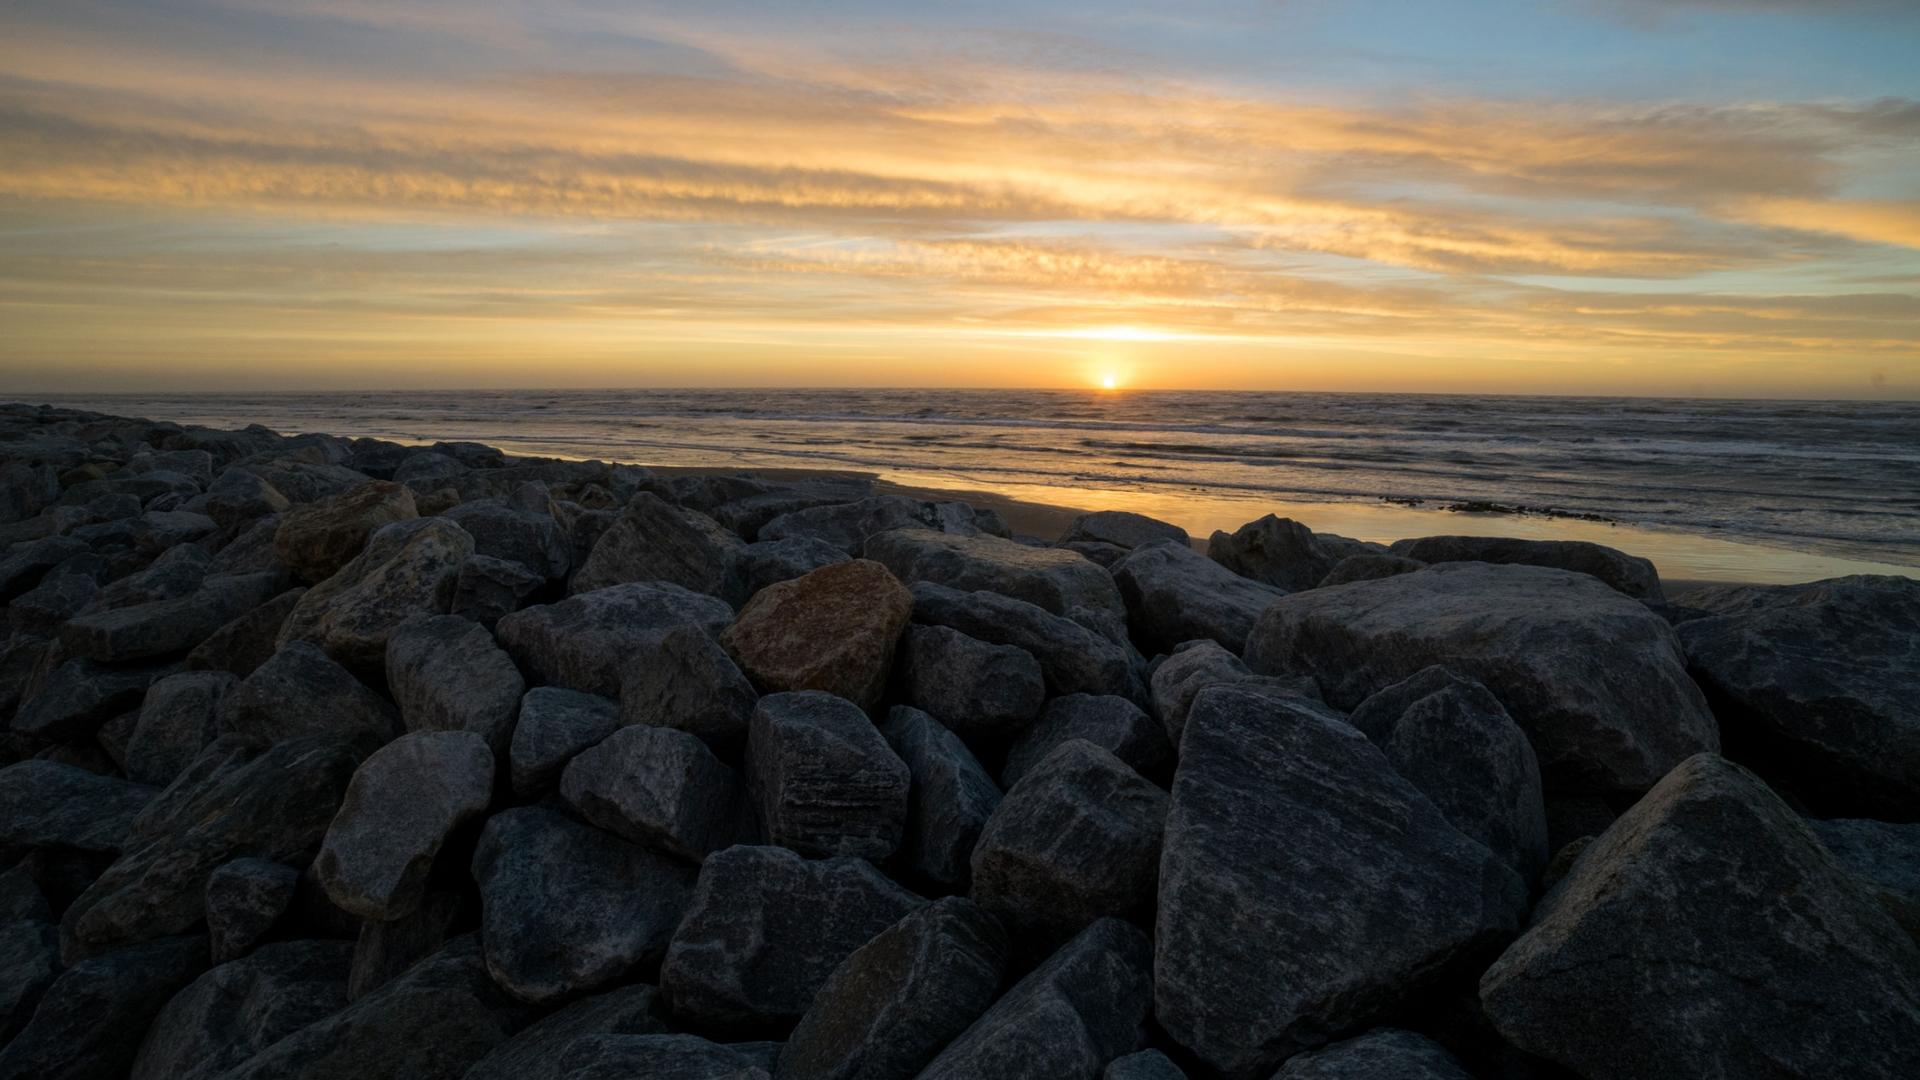 The sun sets into the ocean along a rocky seawall